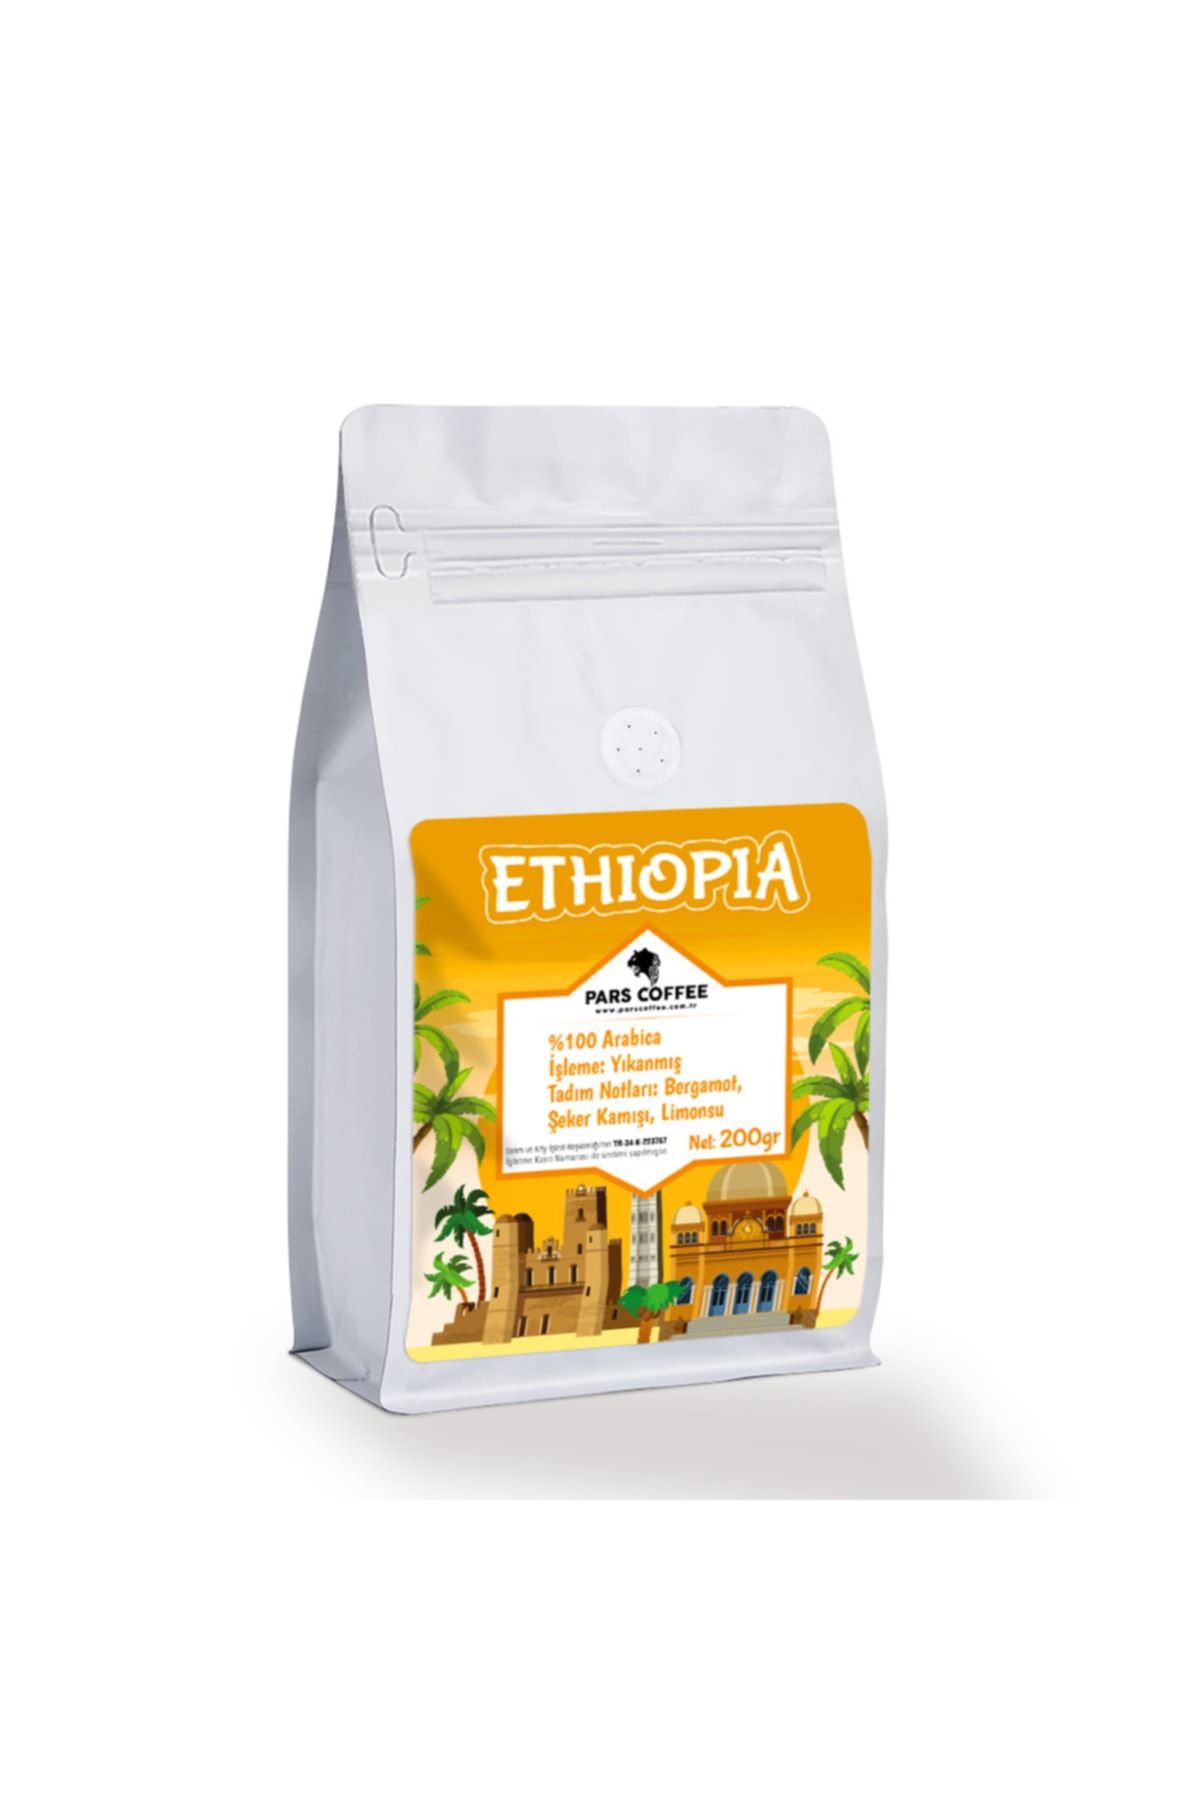 PARS COFFEE Ethiopia Filtre Kahve Etiyopya